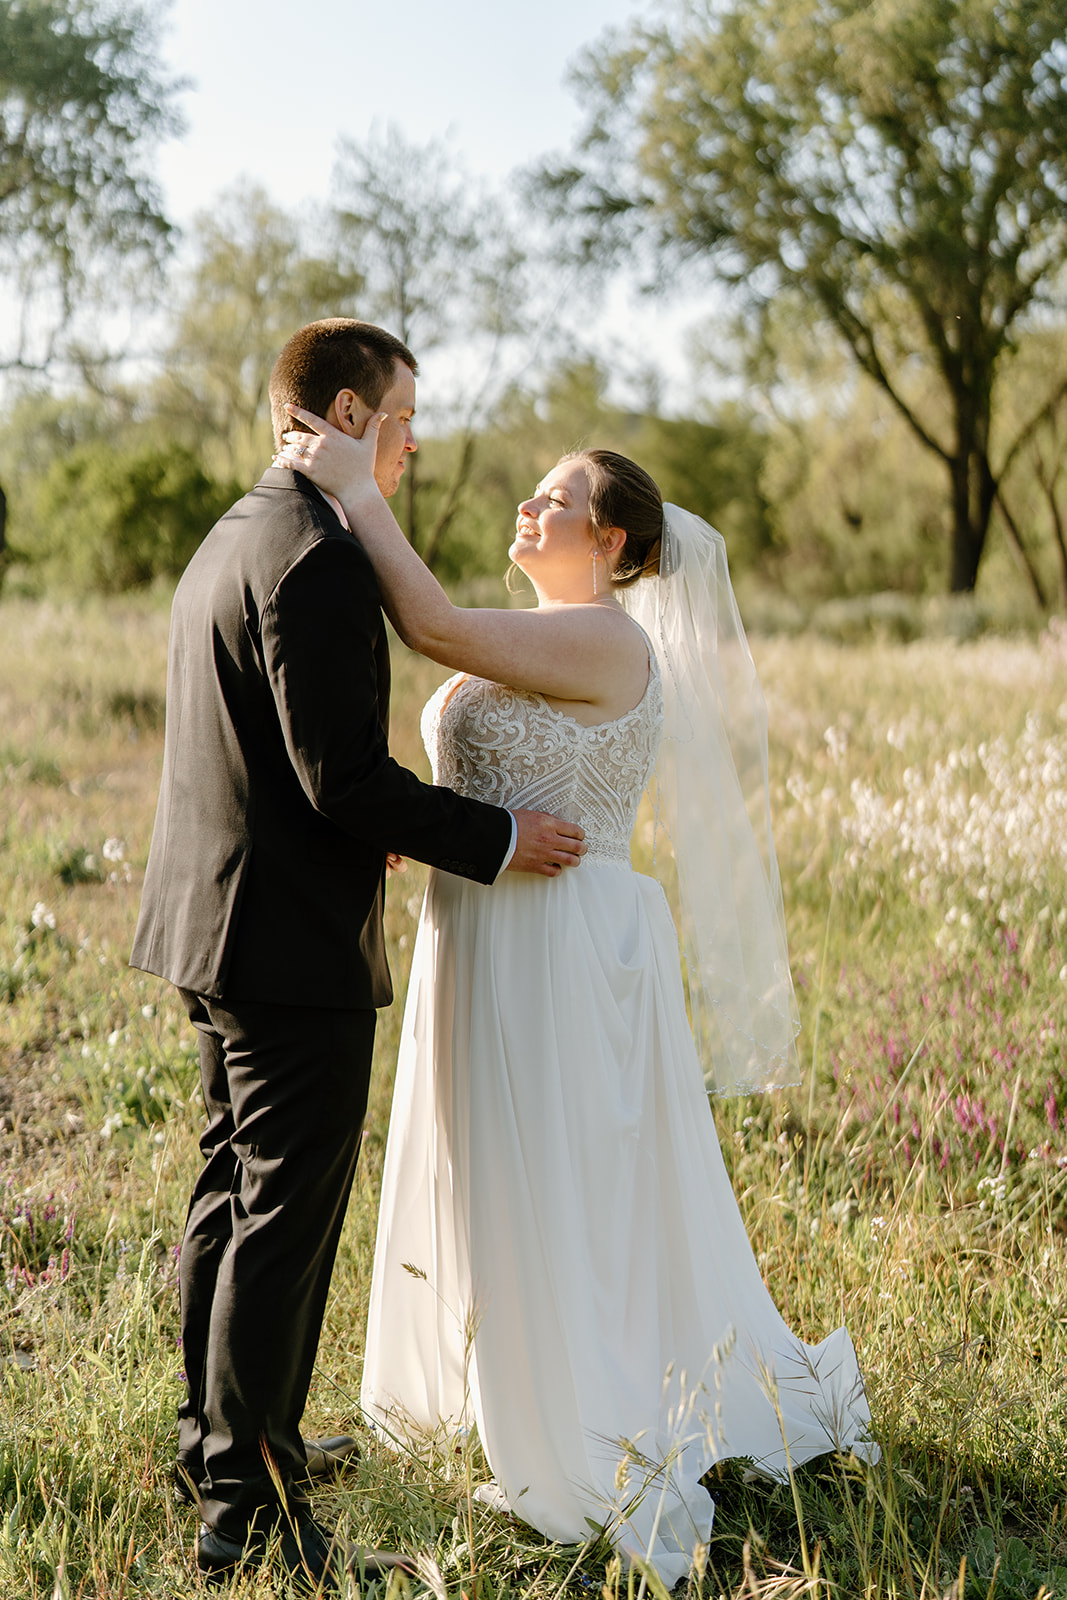 Sydney Jai Photography - Northern California Wedding Photographer, How to plan a wedding, wedding planning tips